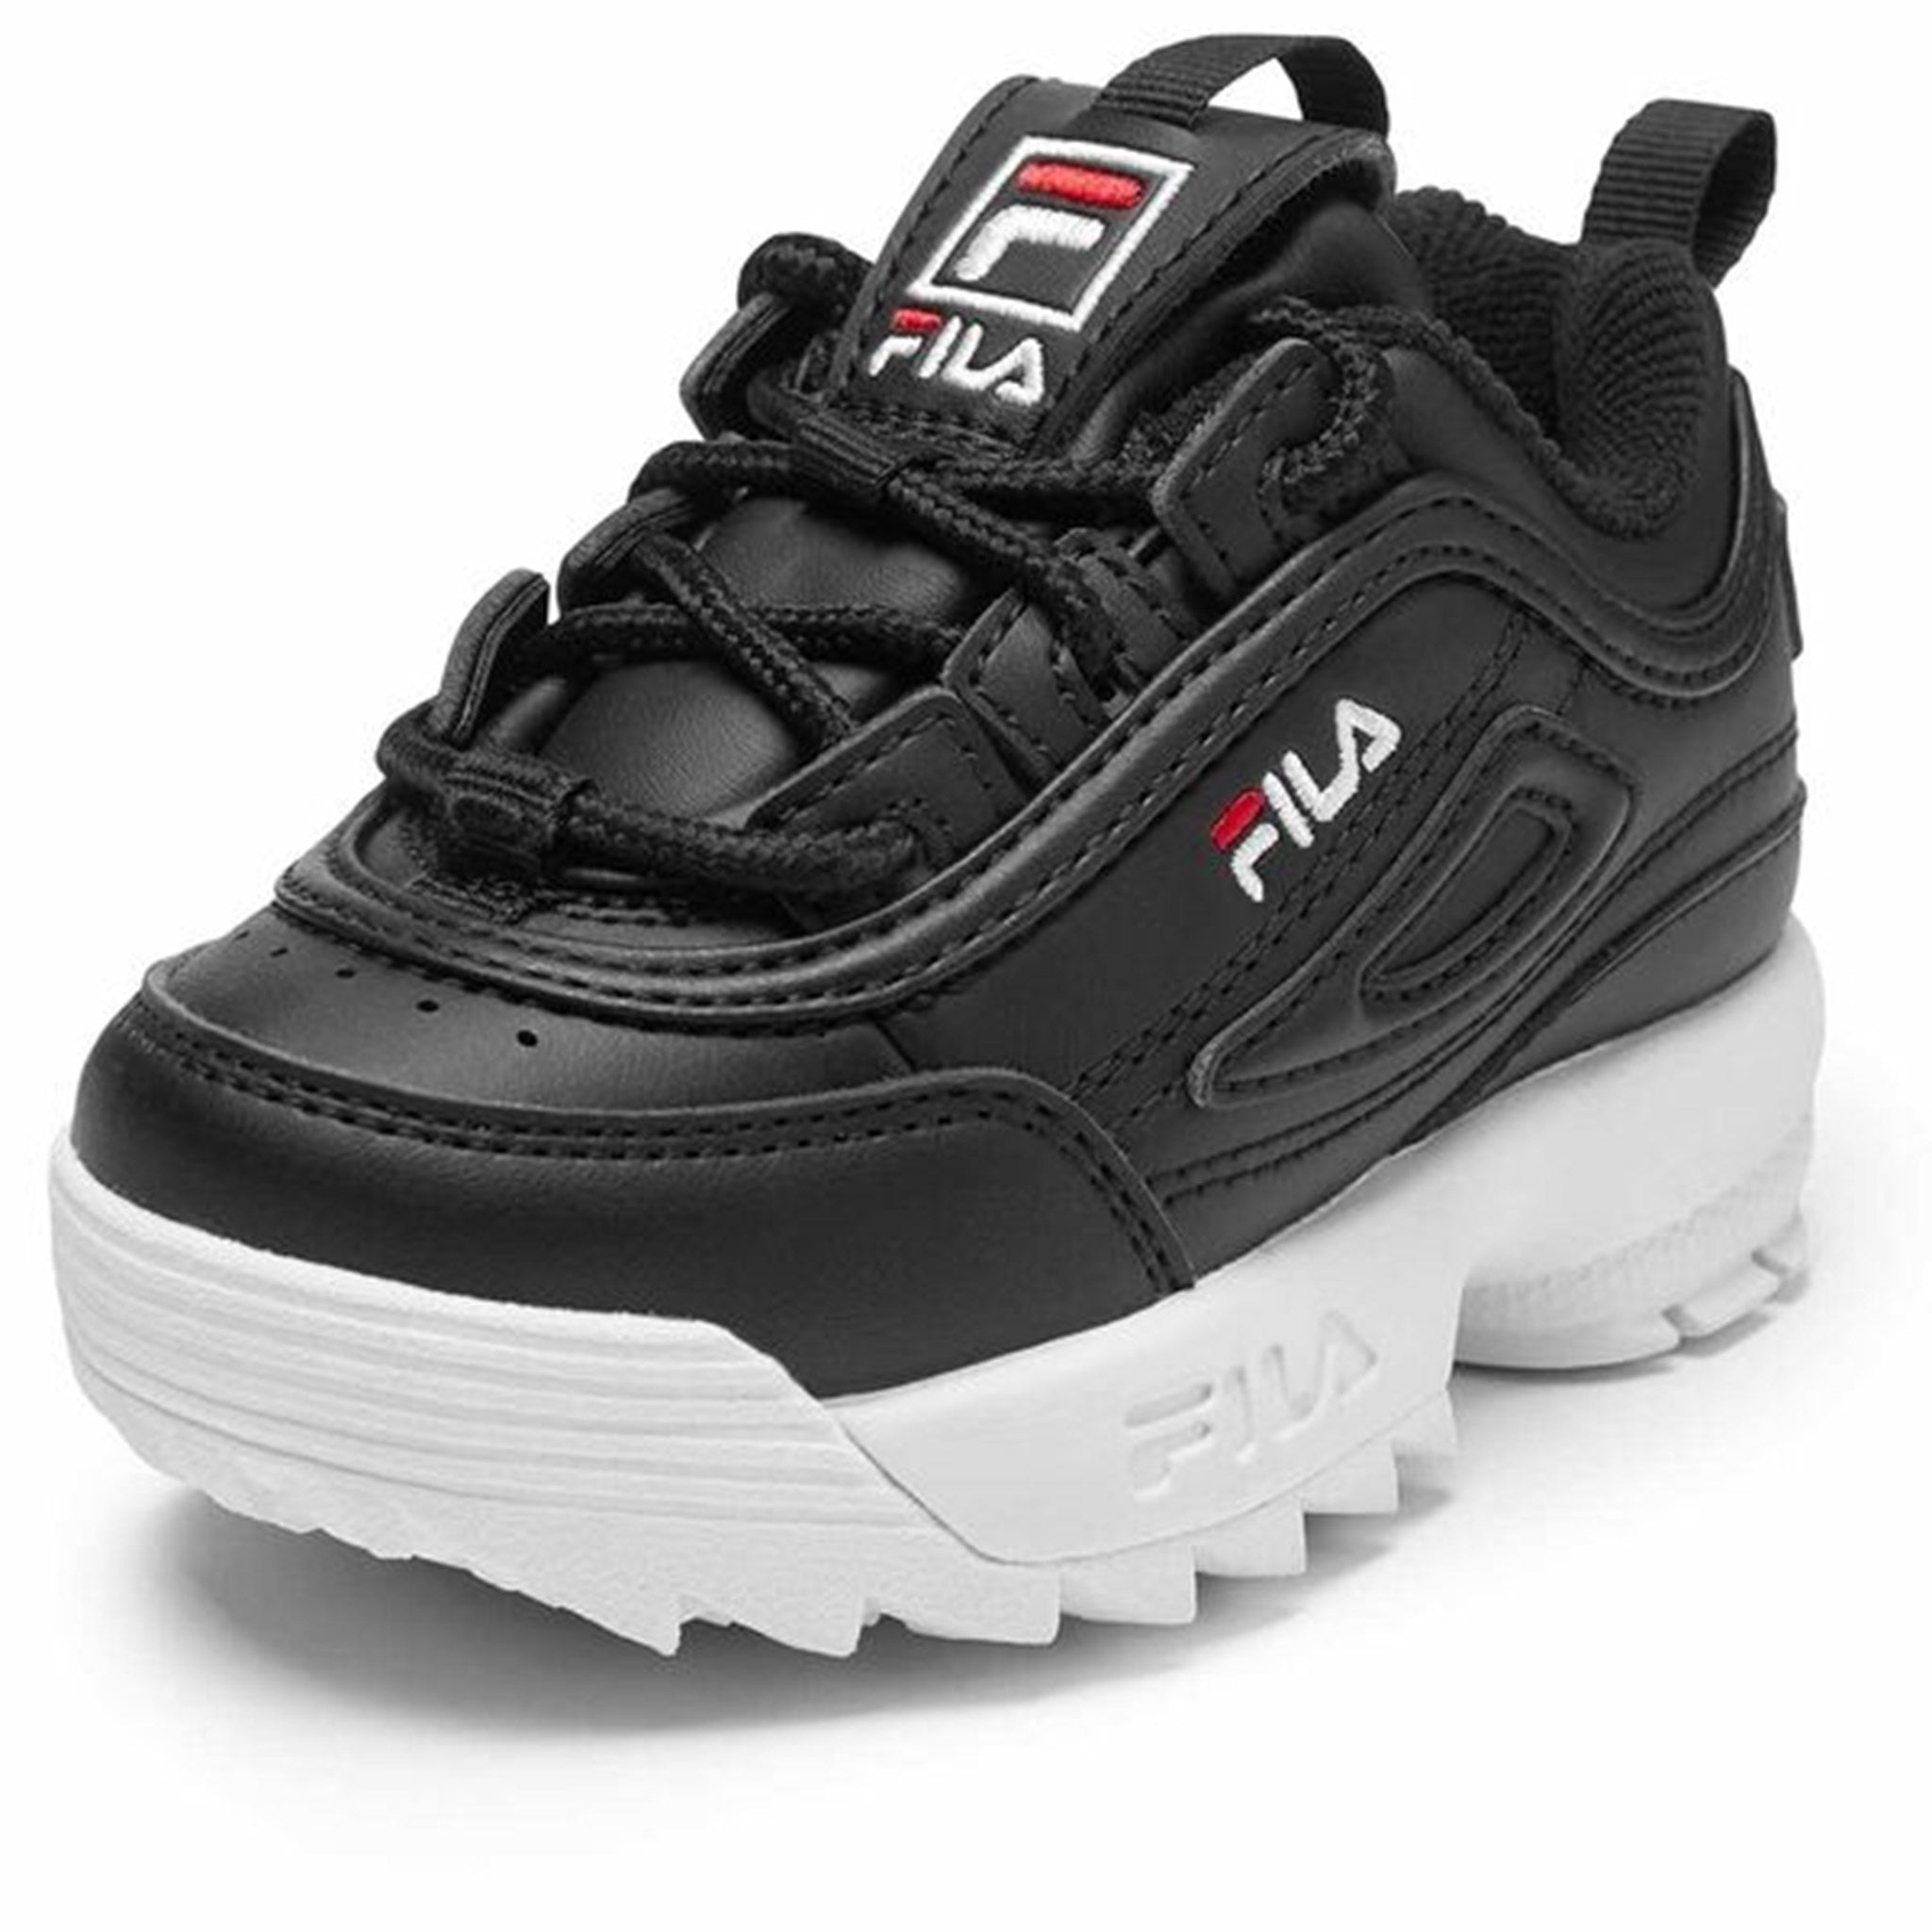 Fila Disruptor Sneakers Black 4